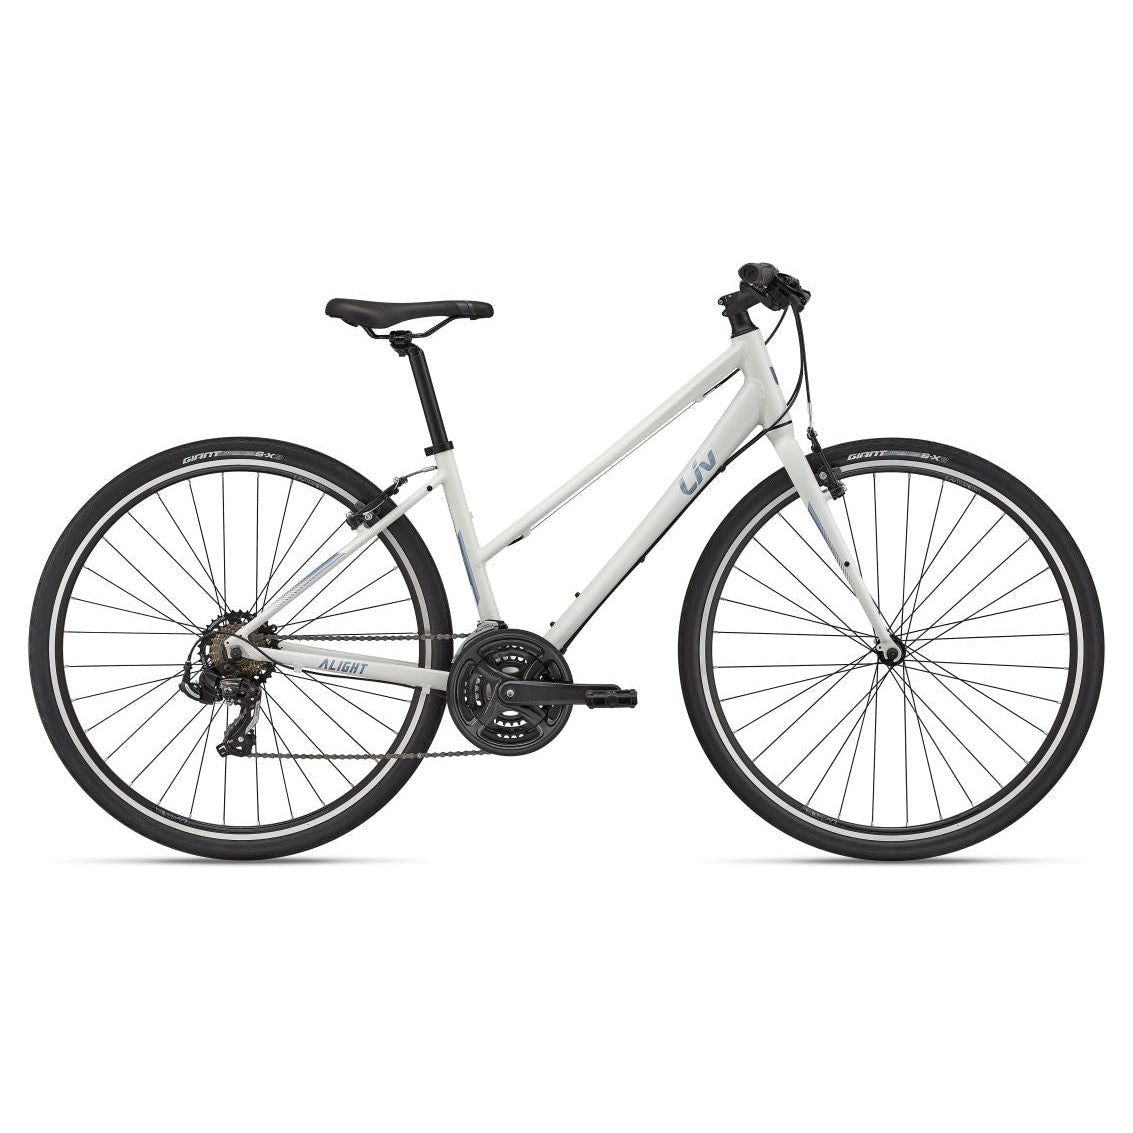 Liv Alight 3 Hybrid Bike - Bikes - Bicycle Warehouse